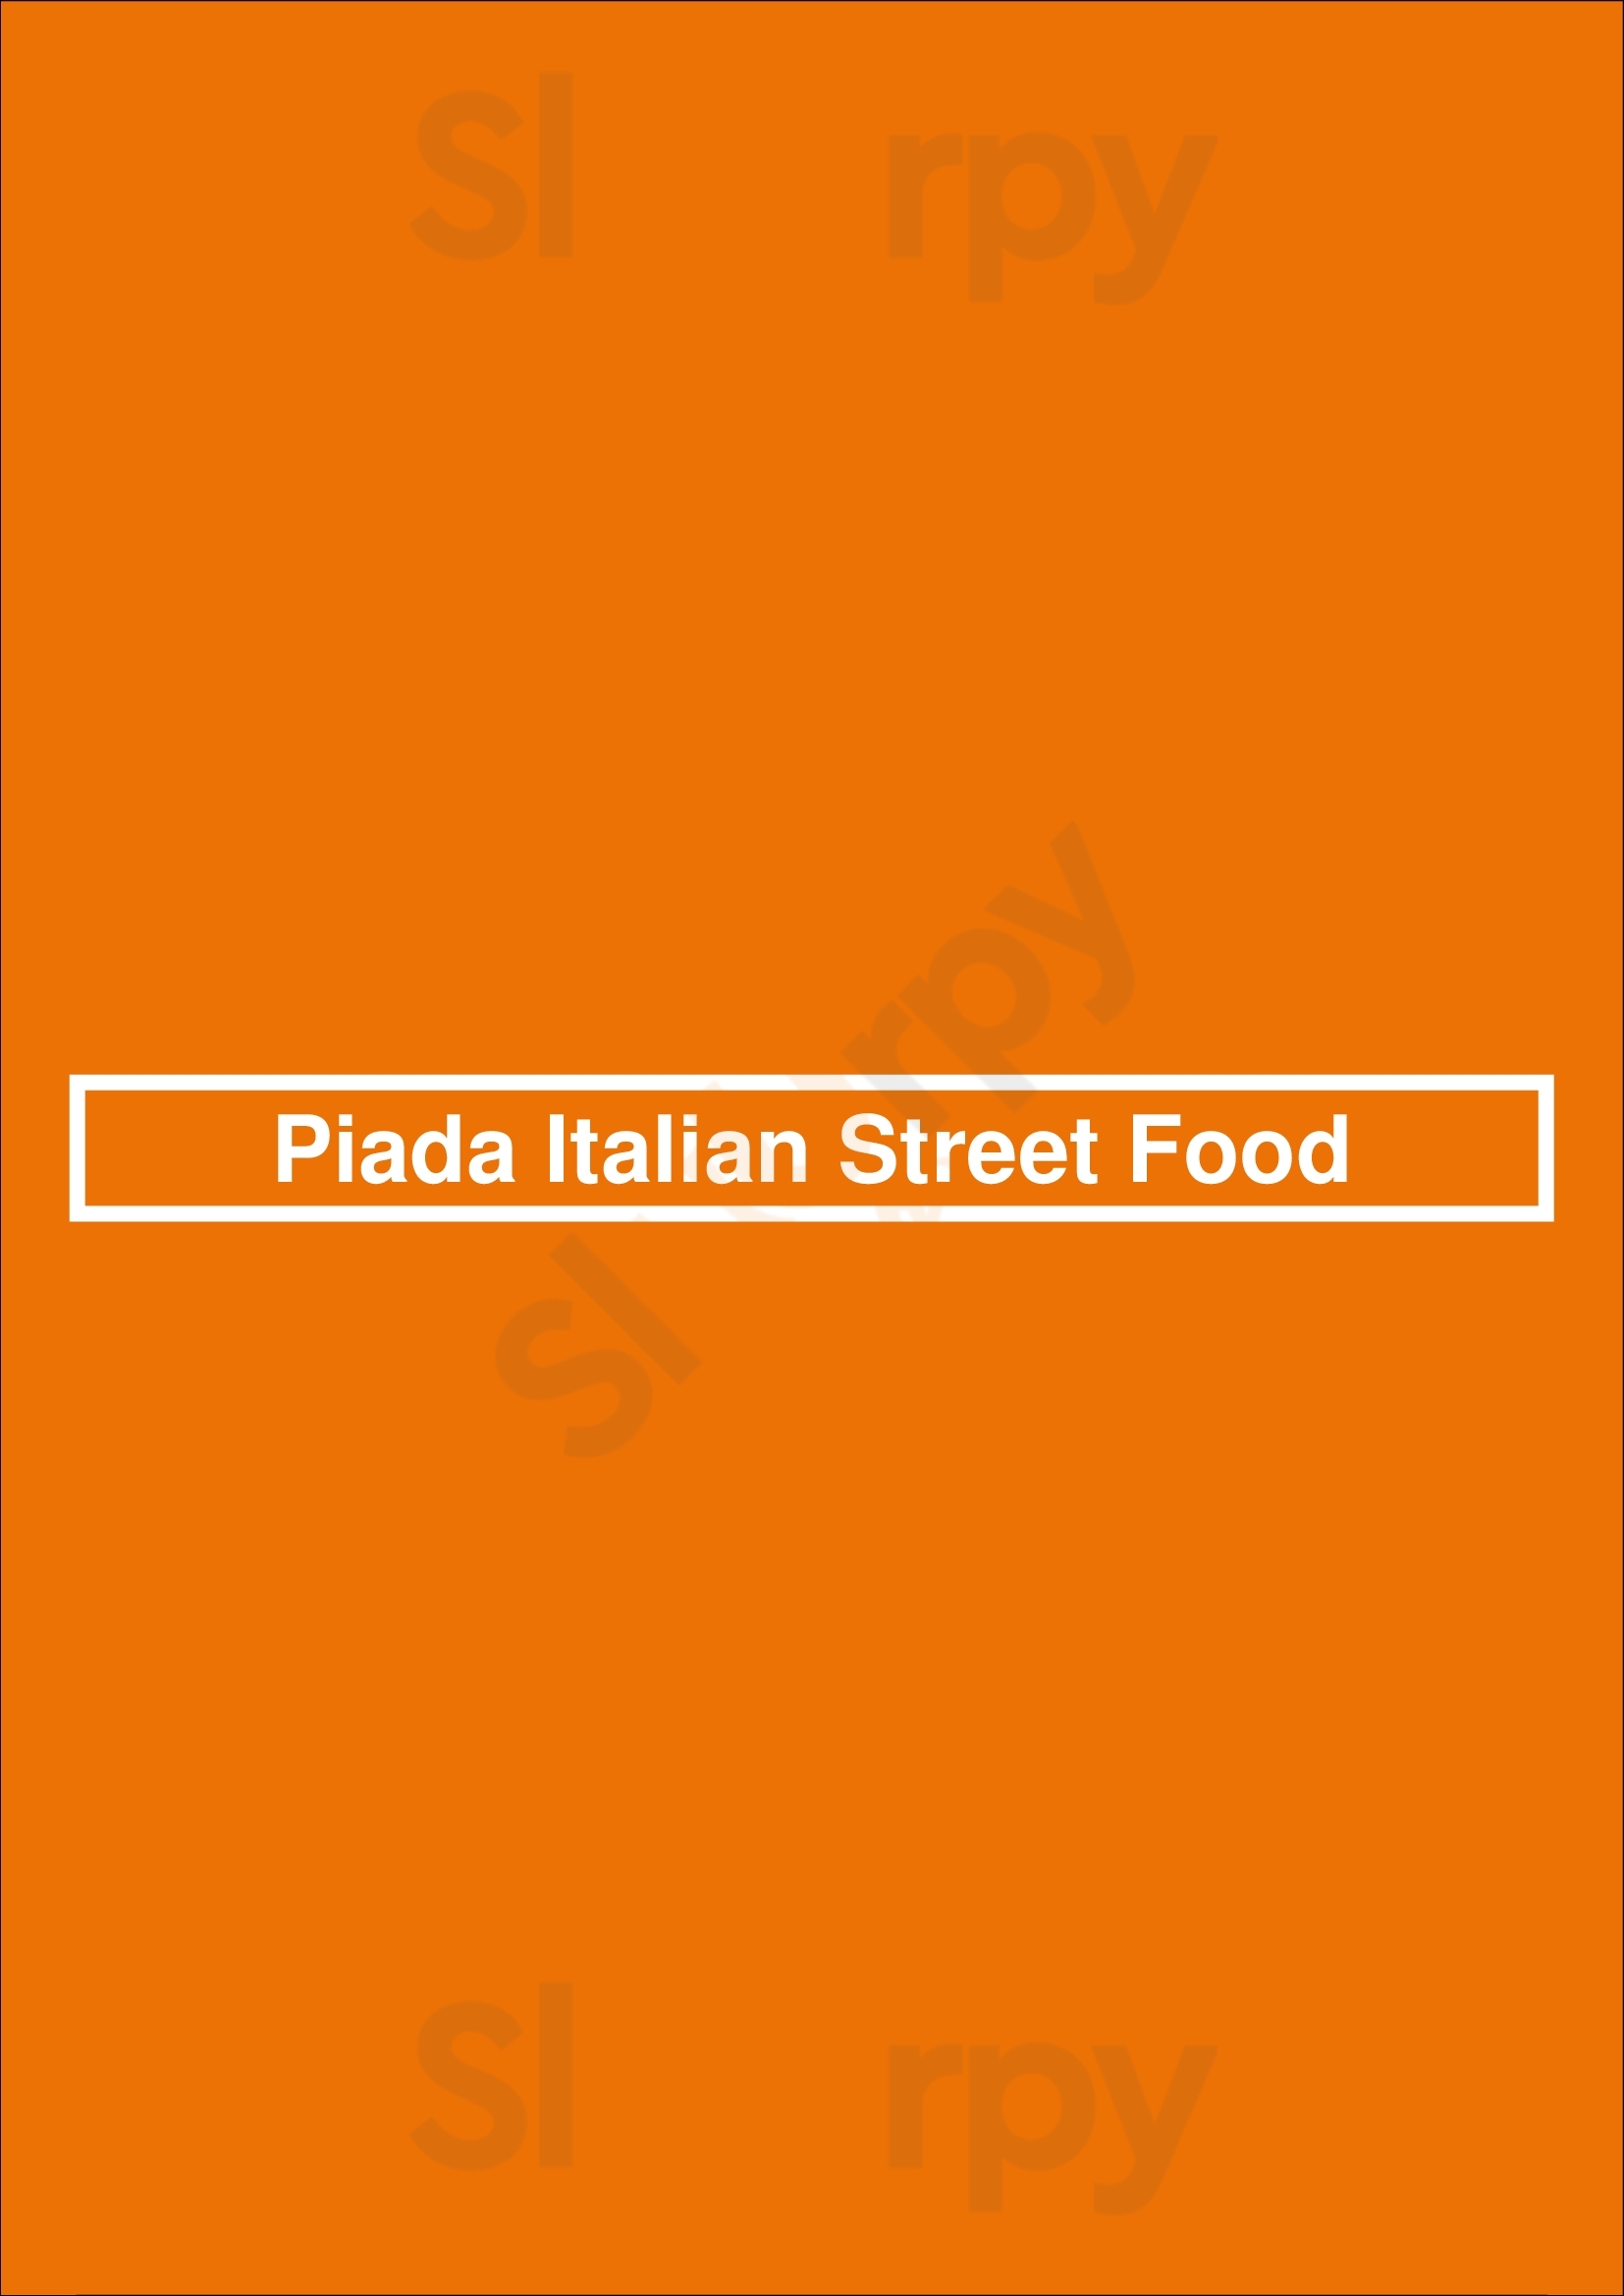 Piada Italian Street Food Indianapolis Menu - 1